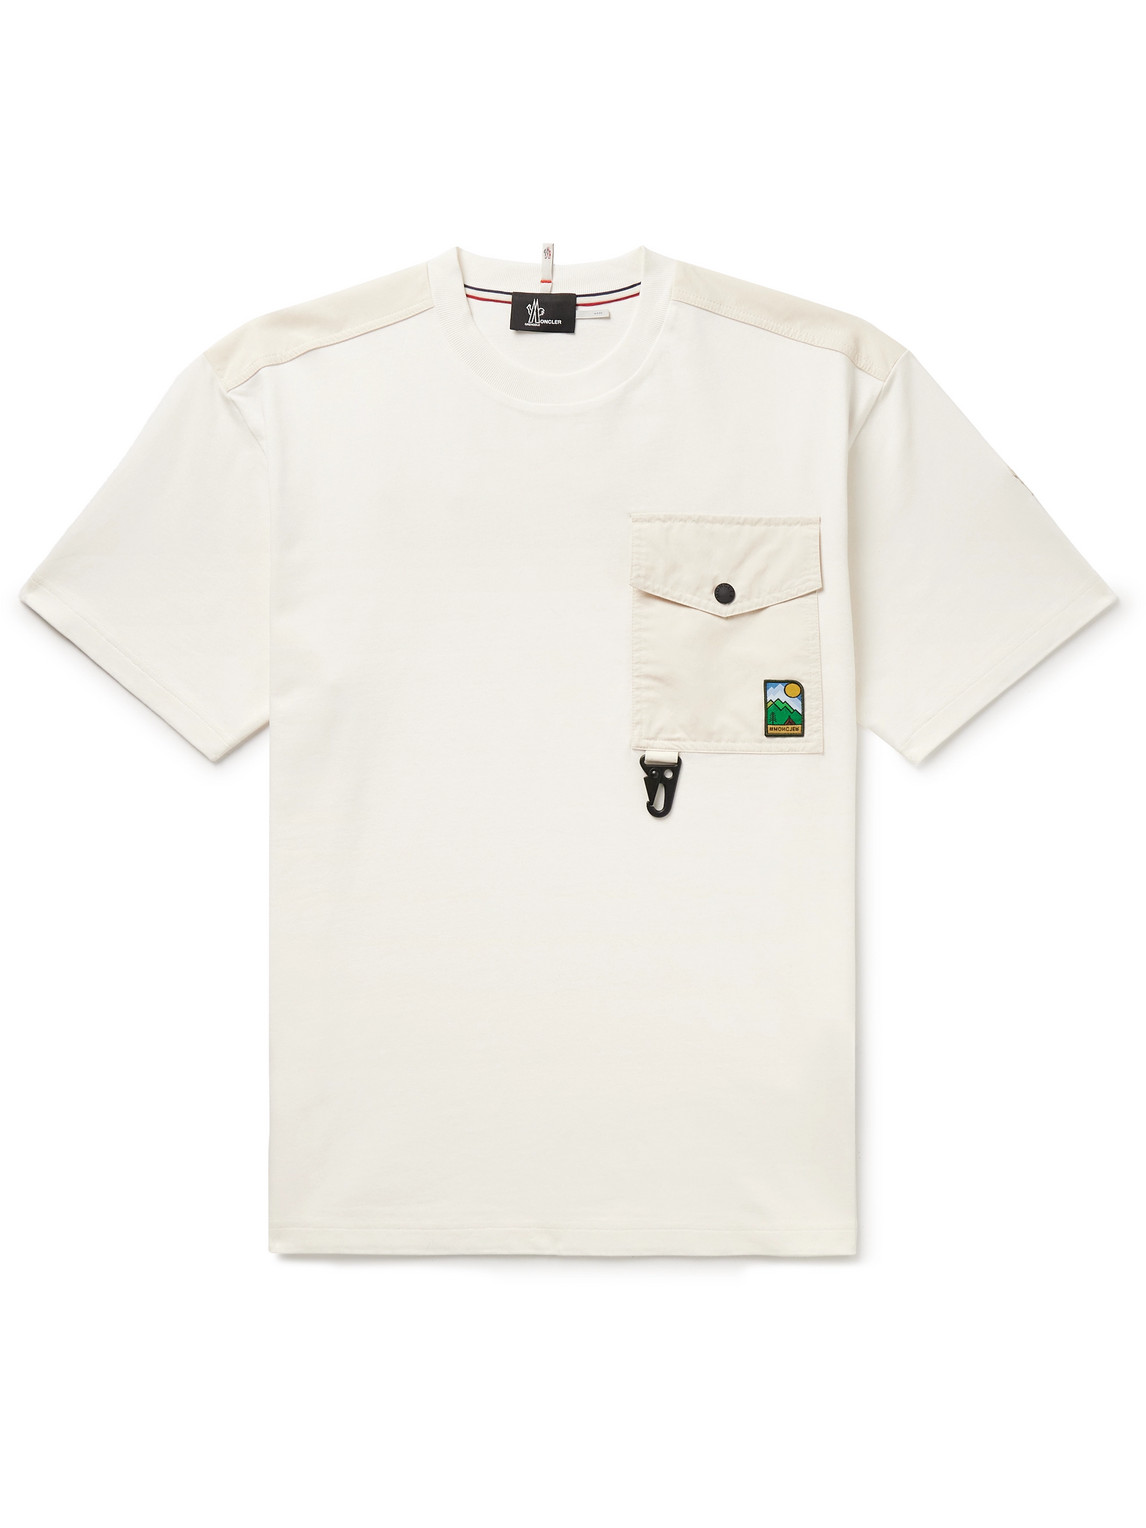 Moncler Grenoble - Logo-Appliquéd Shell-Trimmed Combed Cotton-Jersey T-Shirt - Men - White - XL von Moncler Grenoble